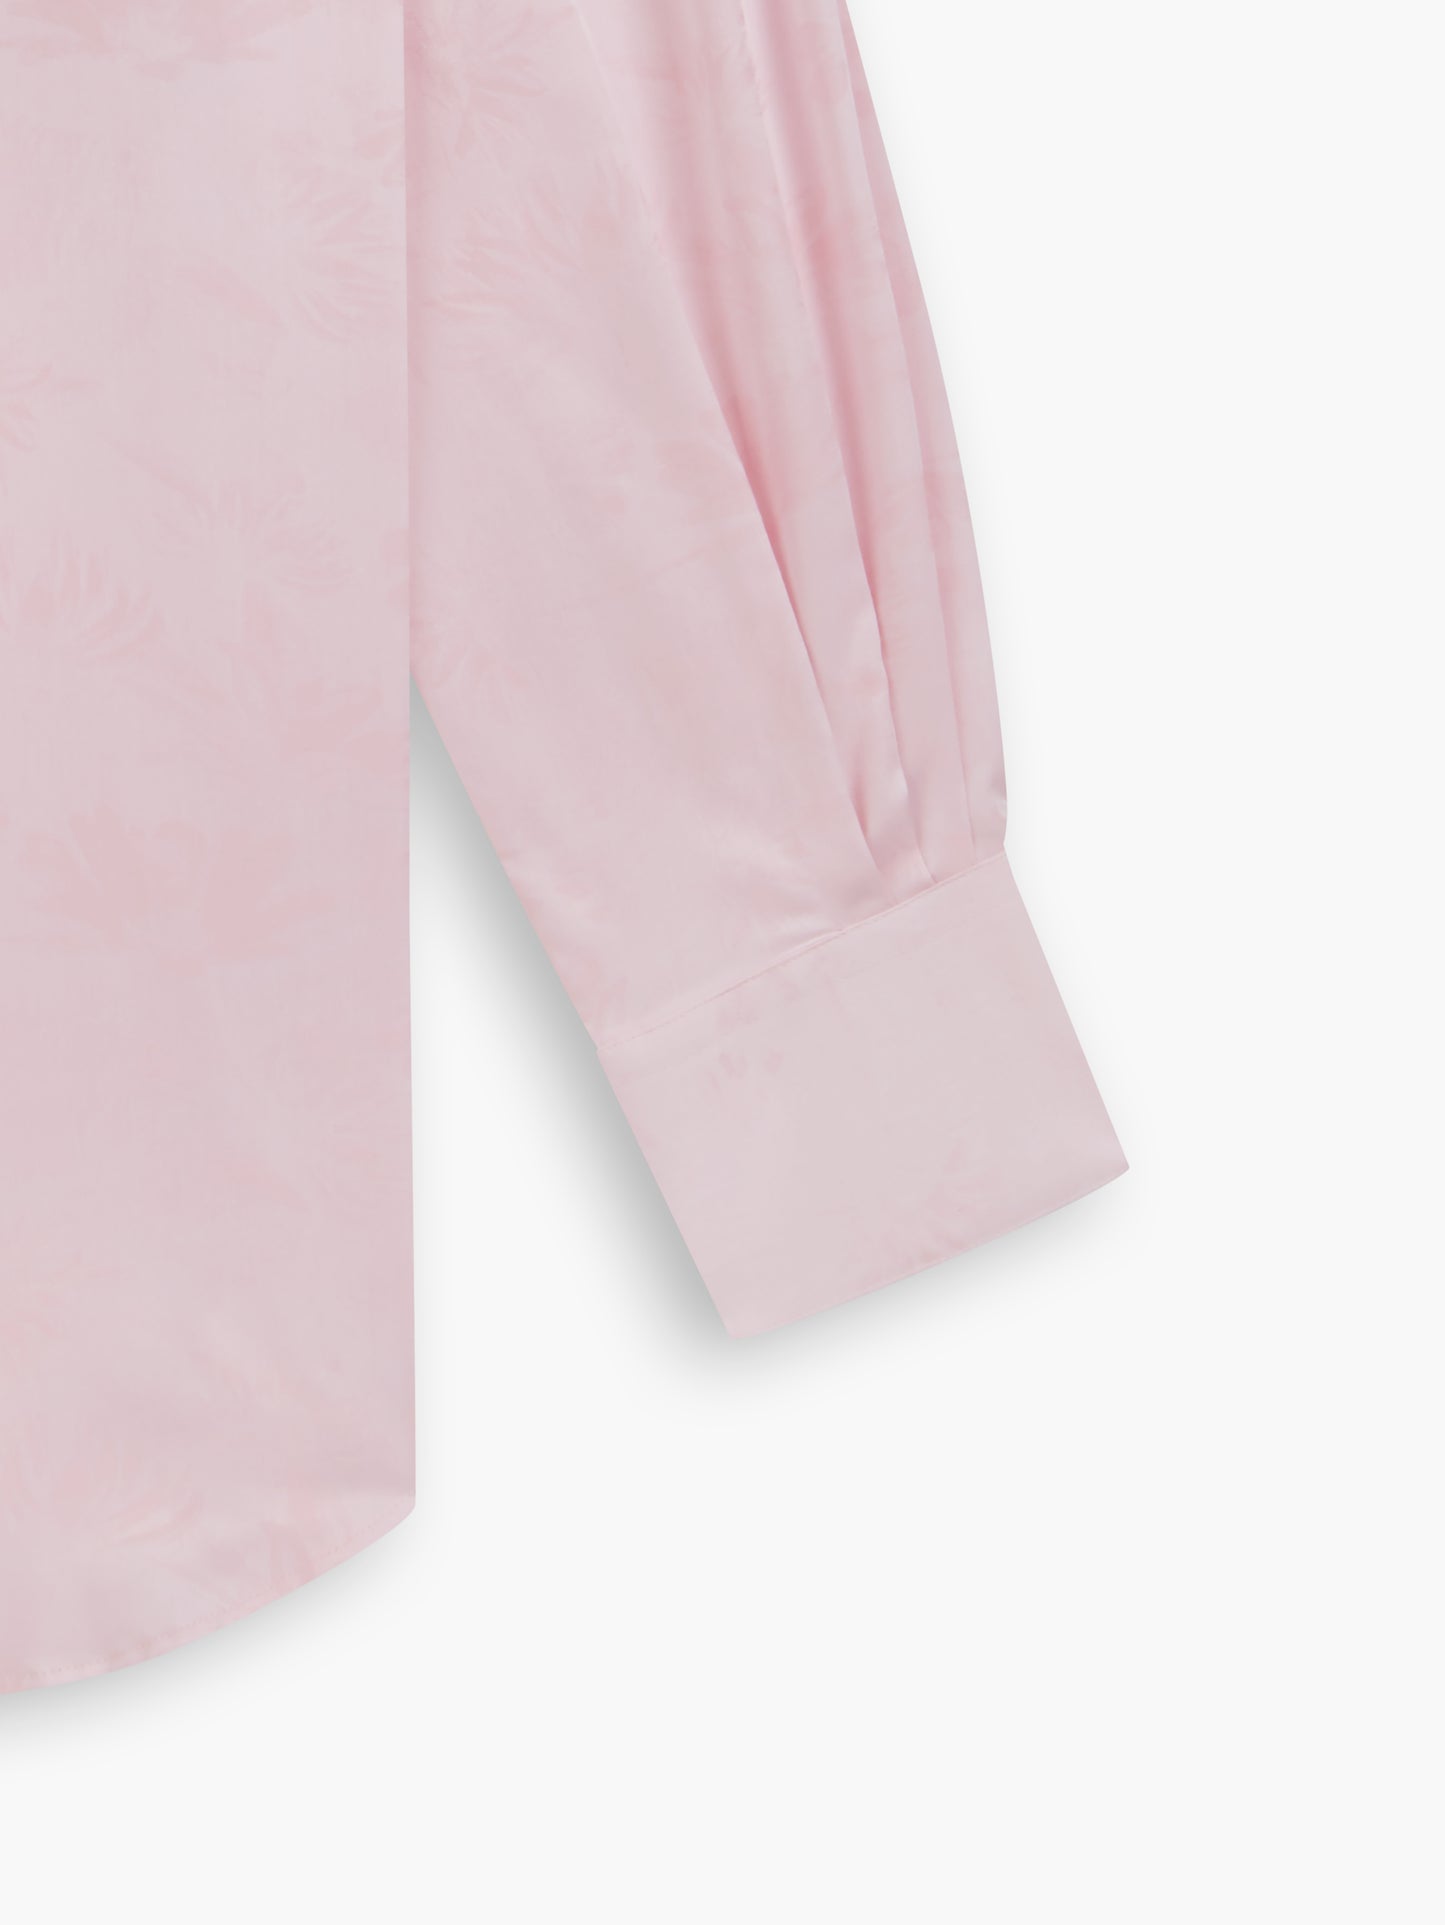 Pink Jacquard Floral Slim Fit Single Cuff Classic Collar Shirt